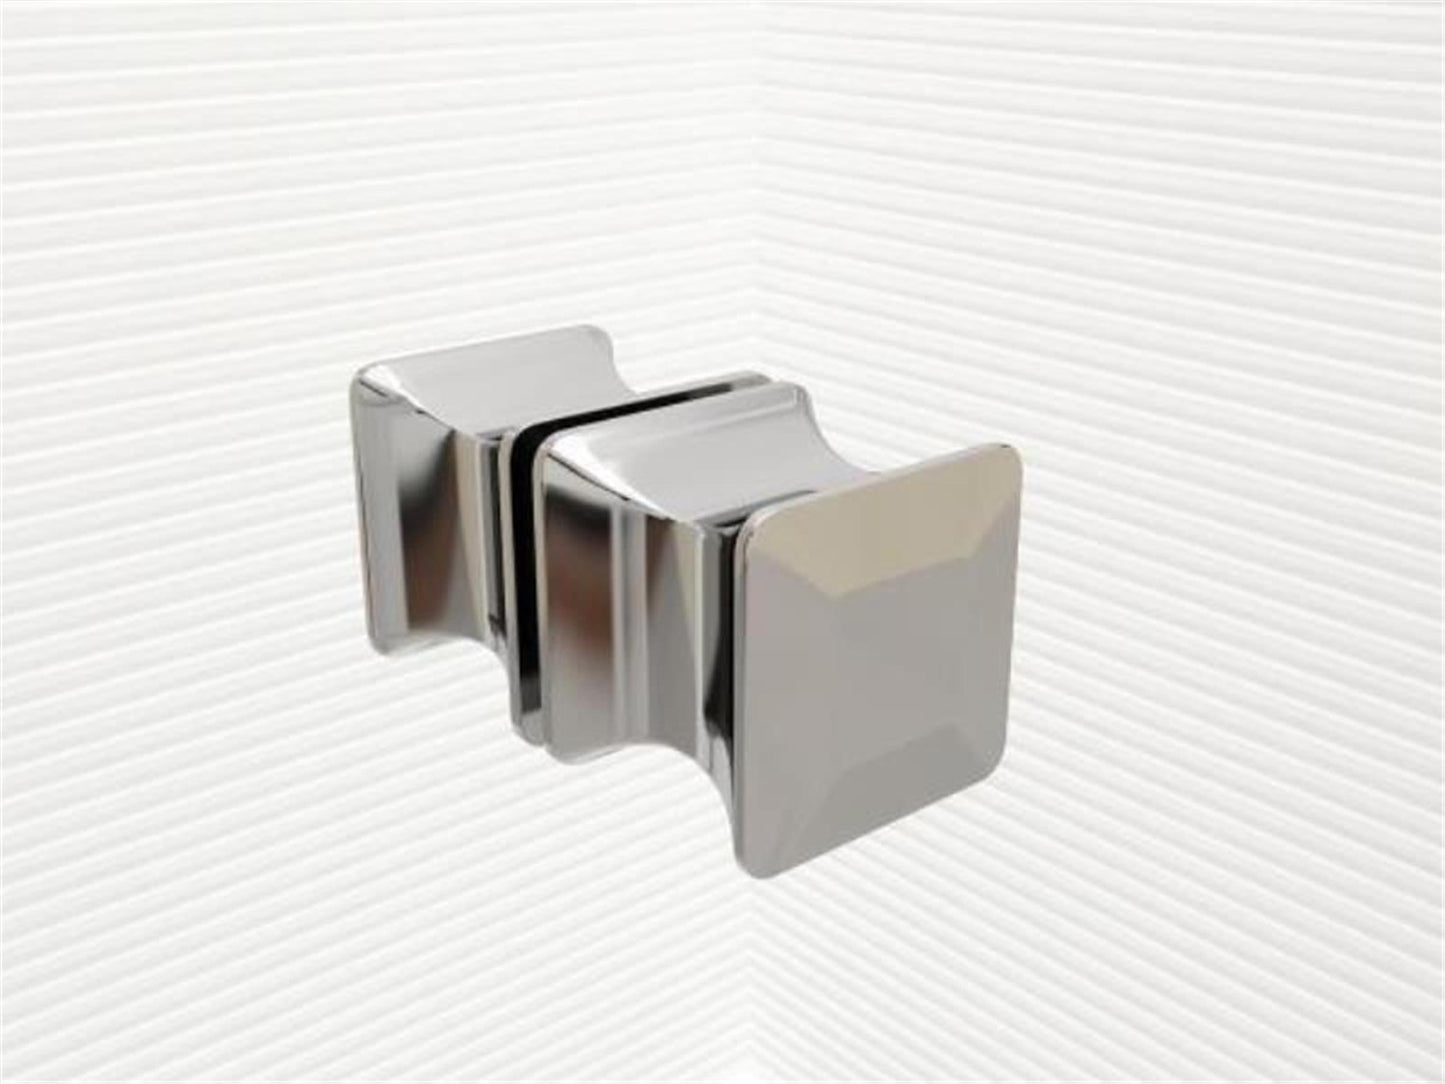 GlasHomeCenter - Box doccia a U "Asuka" (100x80x195cm) - 8mm - box doccia ad angolo - parete doccia - senza piatto doccia